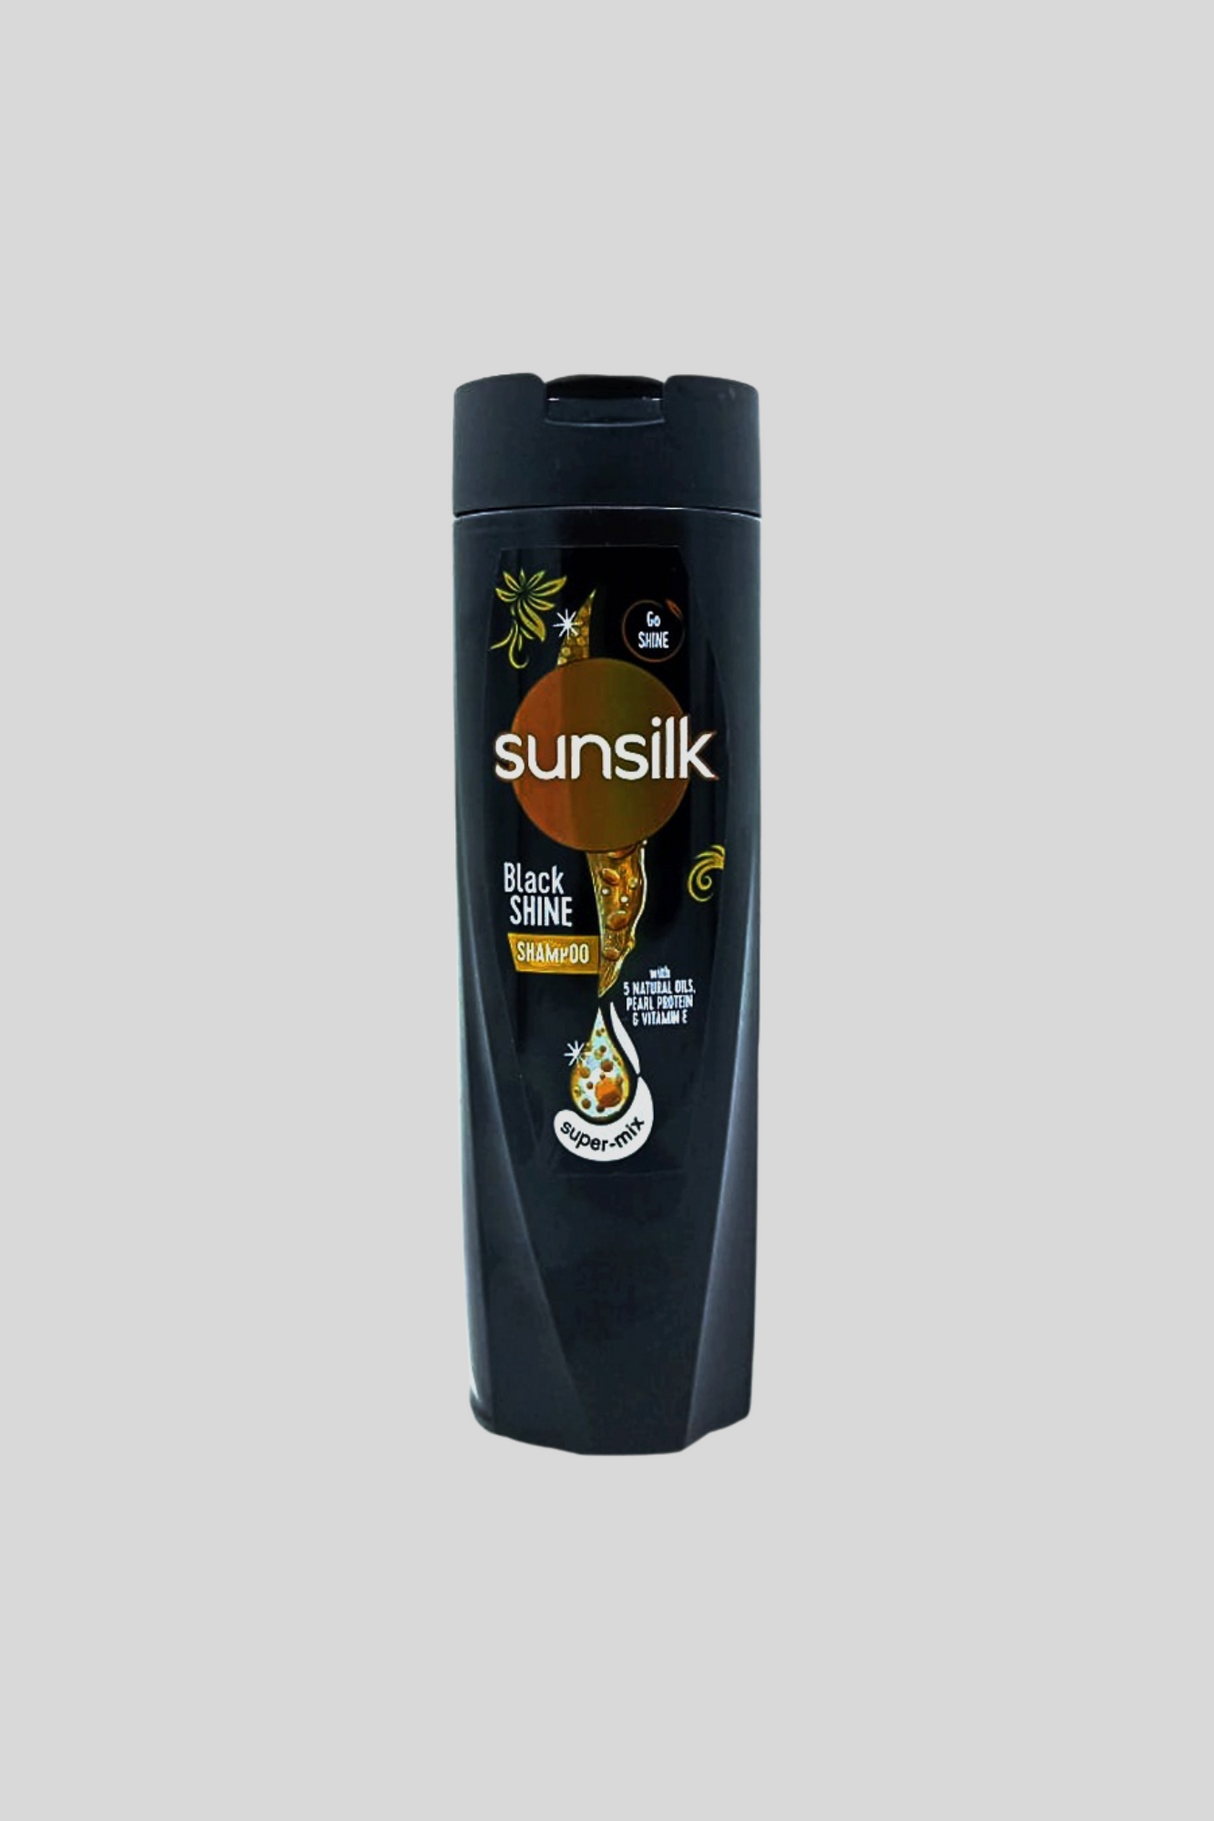 sunsilk shampoo black shine 185ml